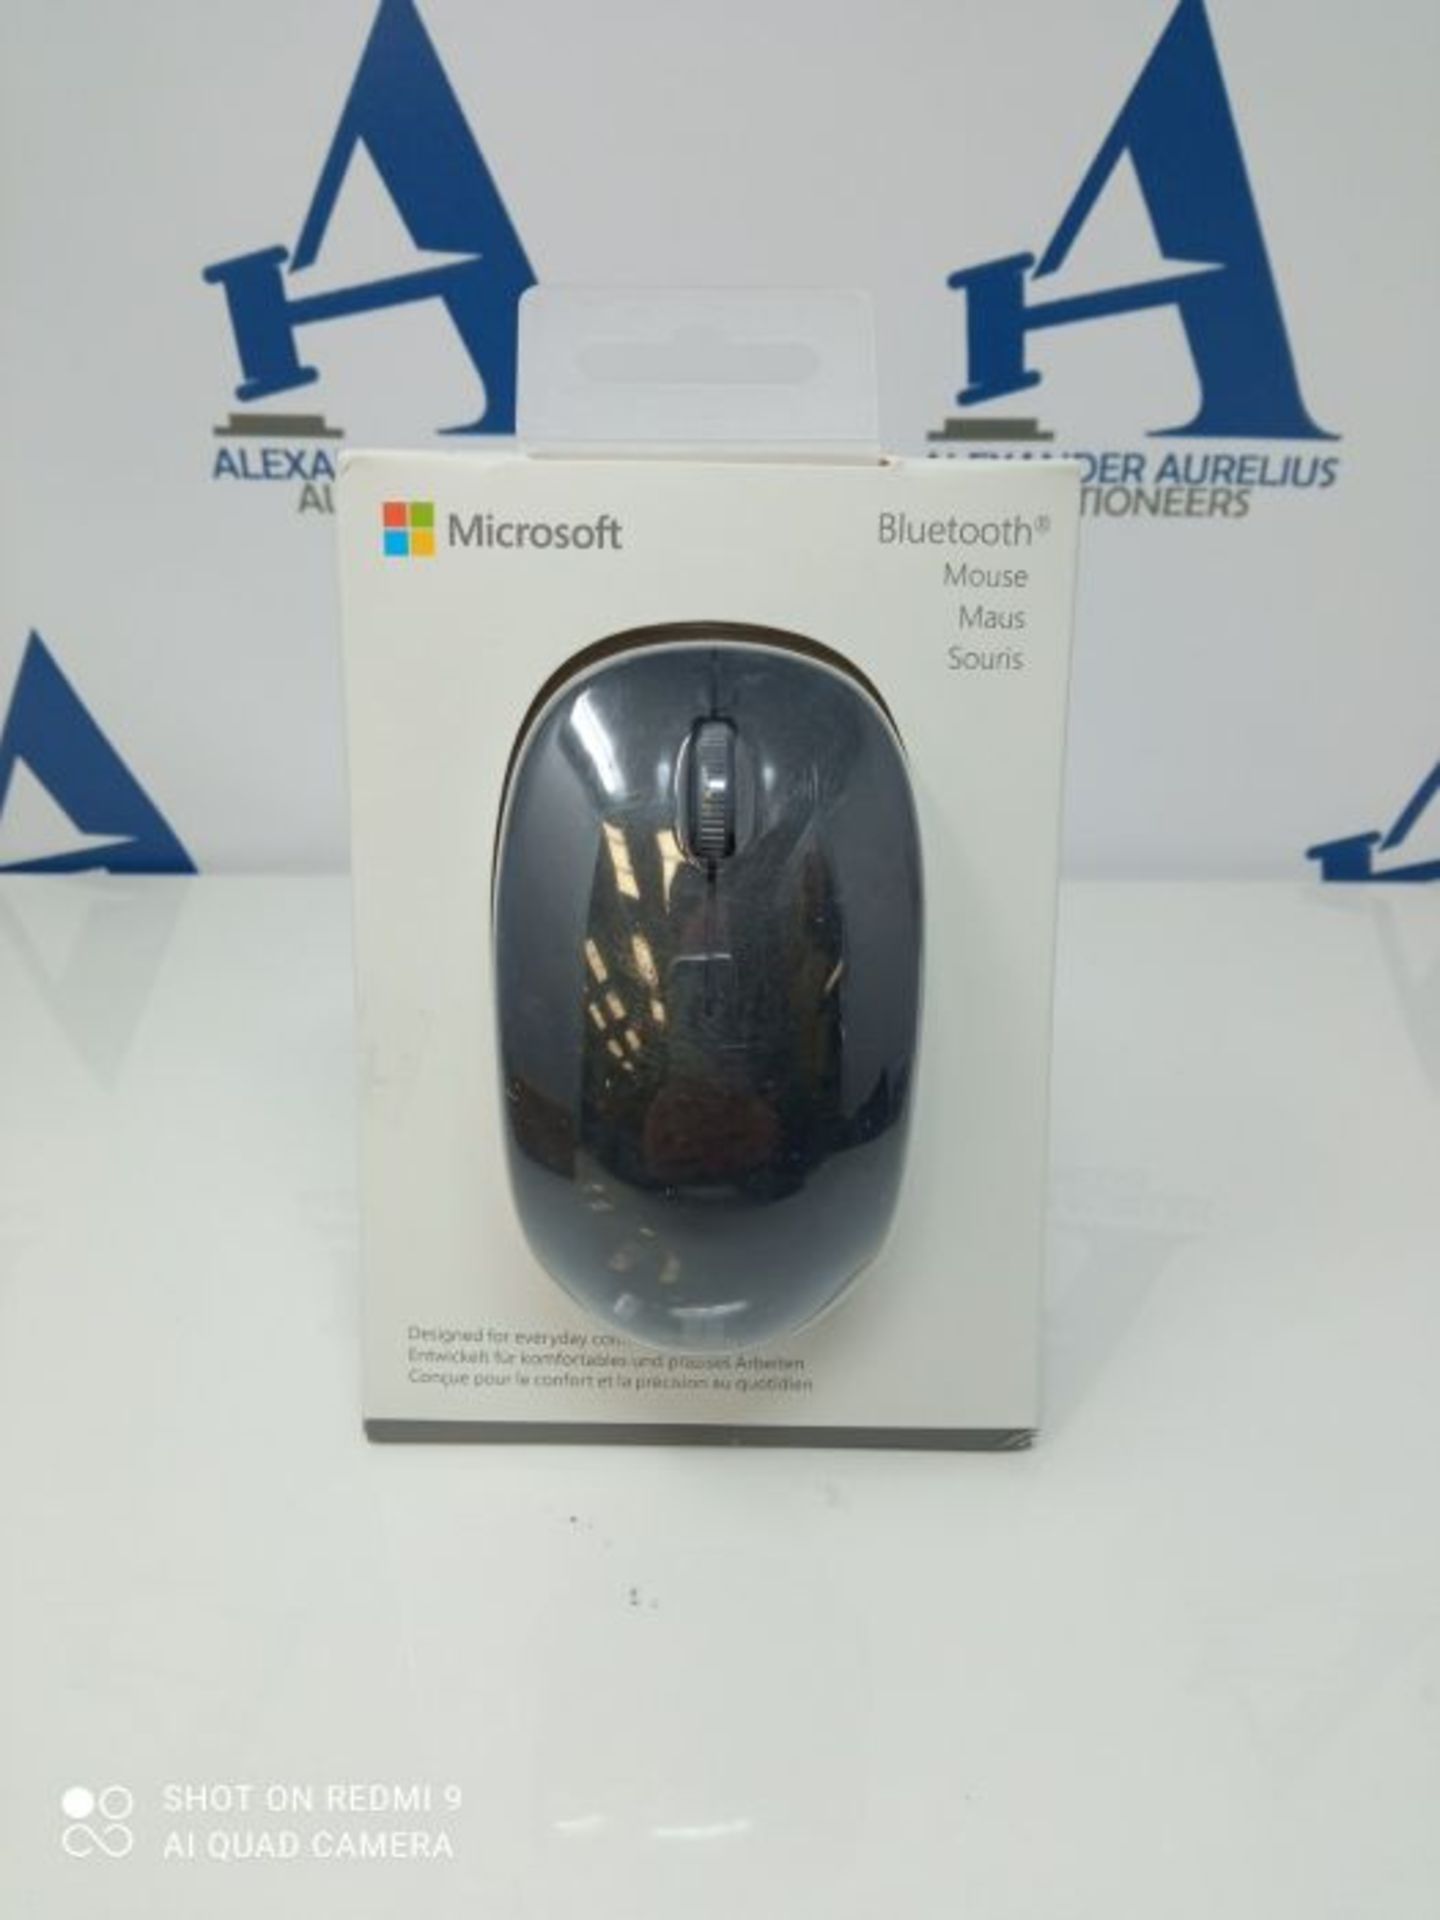 Microsoft RJN-00002 Bluetooth Mouse - Black - Image 2 of 3